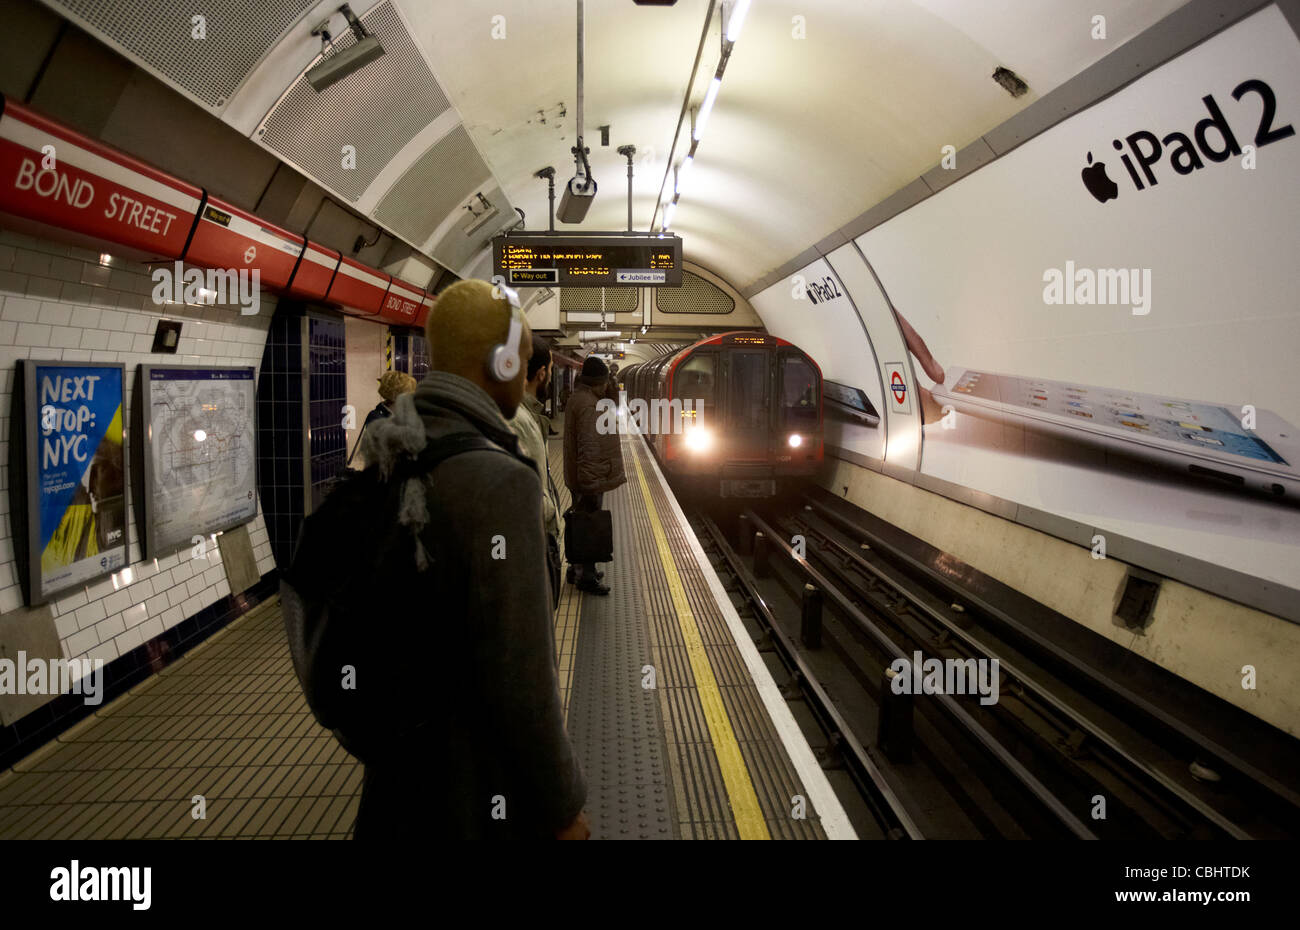 london underground train arriving in bond street station with passengers waiting england united kingdom uk Stock Photo